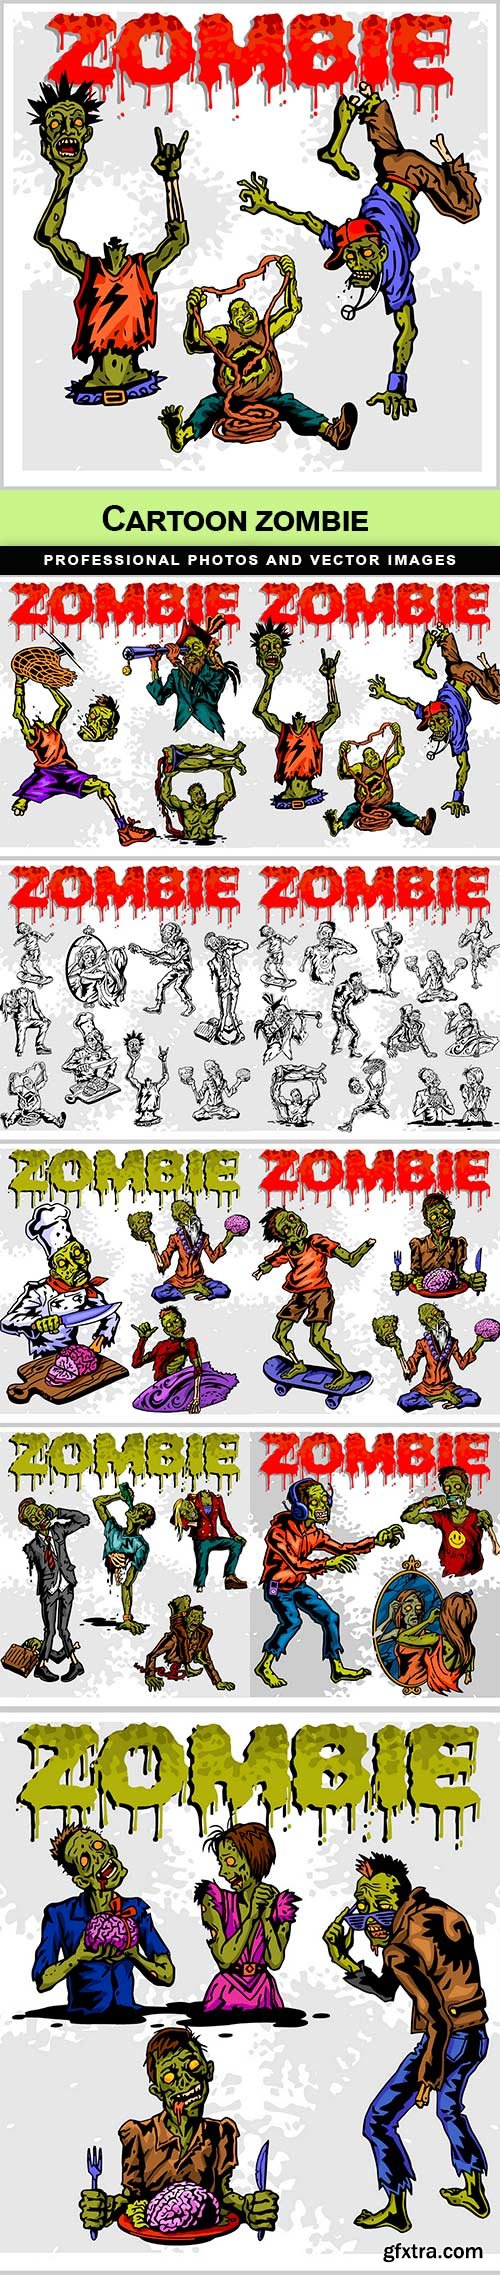 Cartoon zombie - 9 EPS